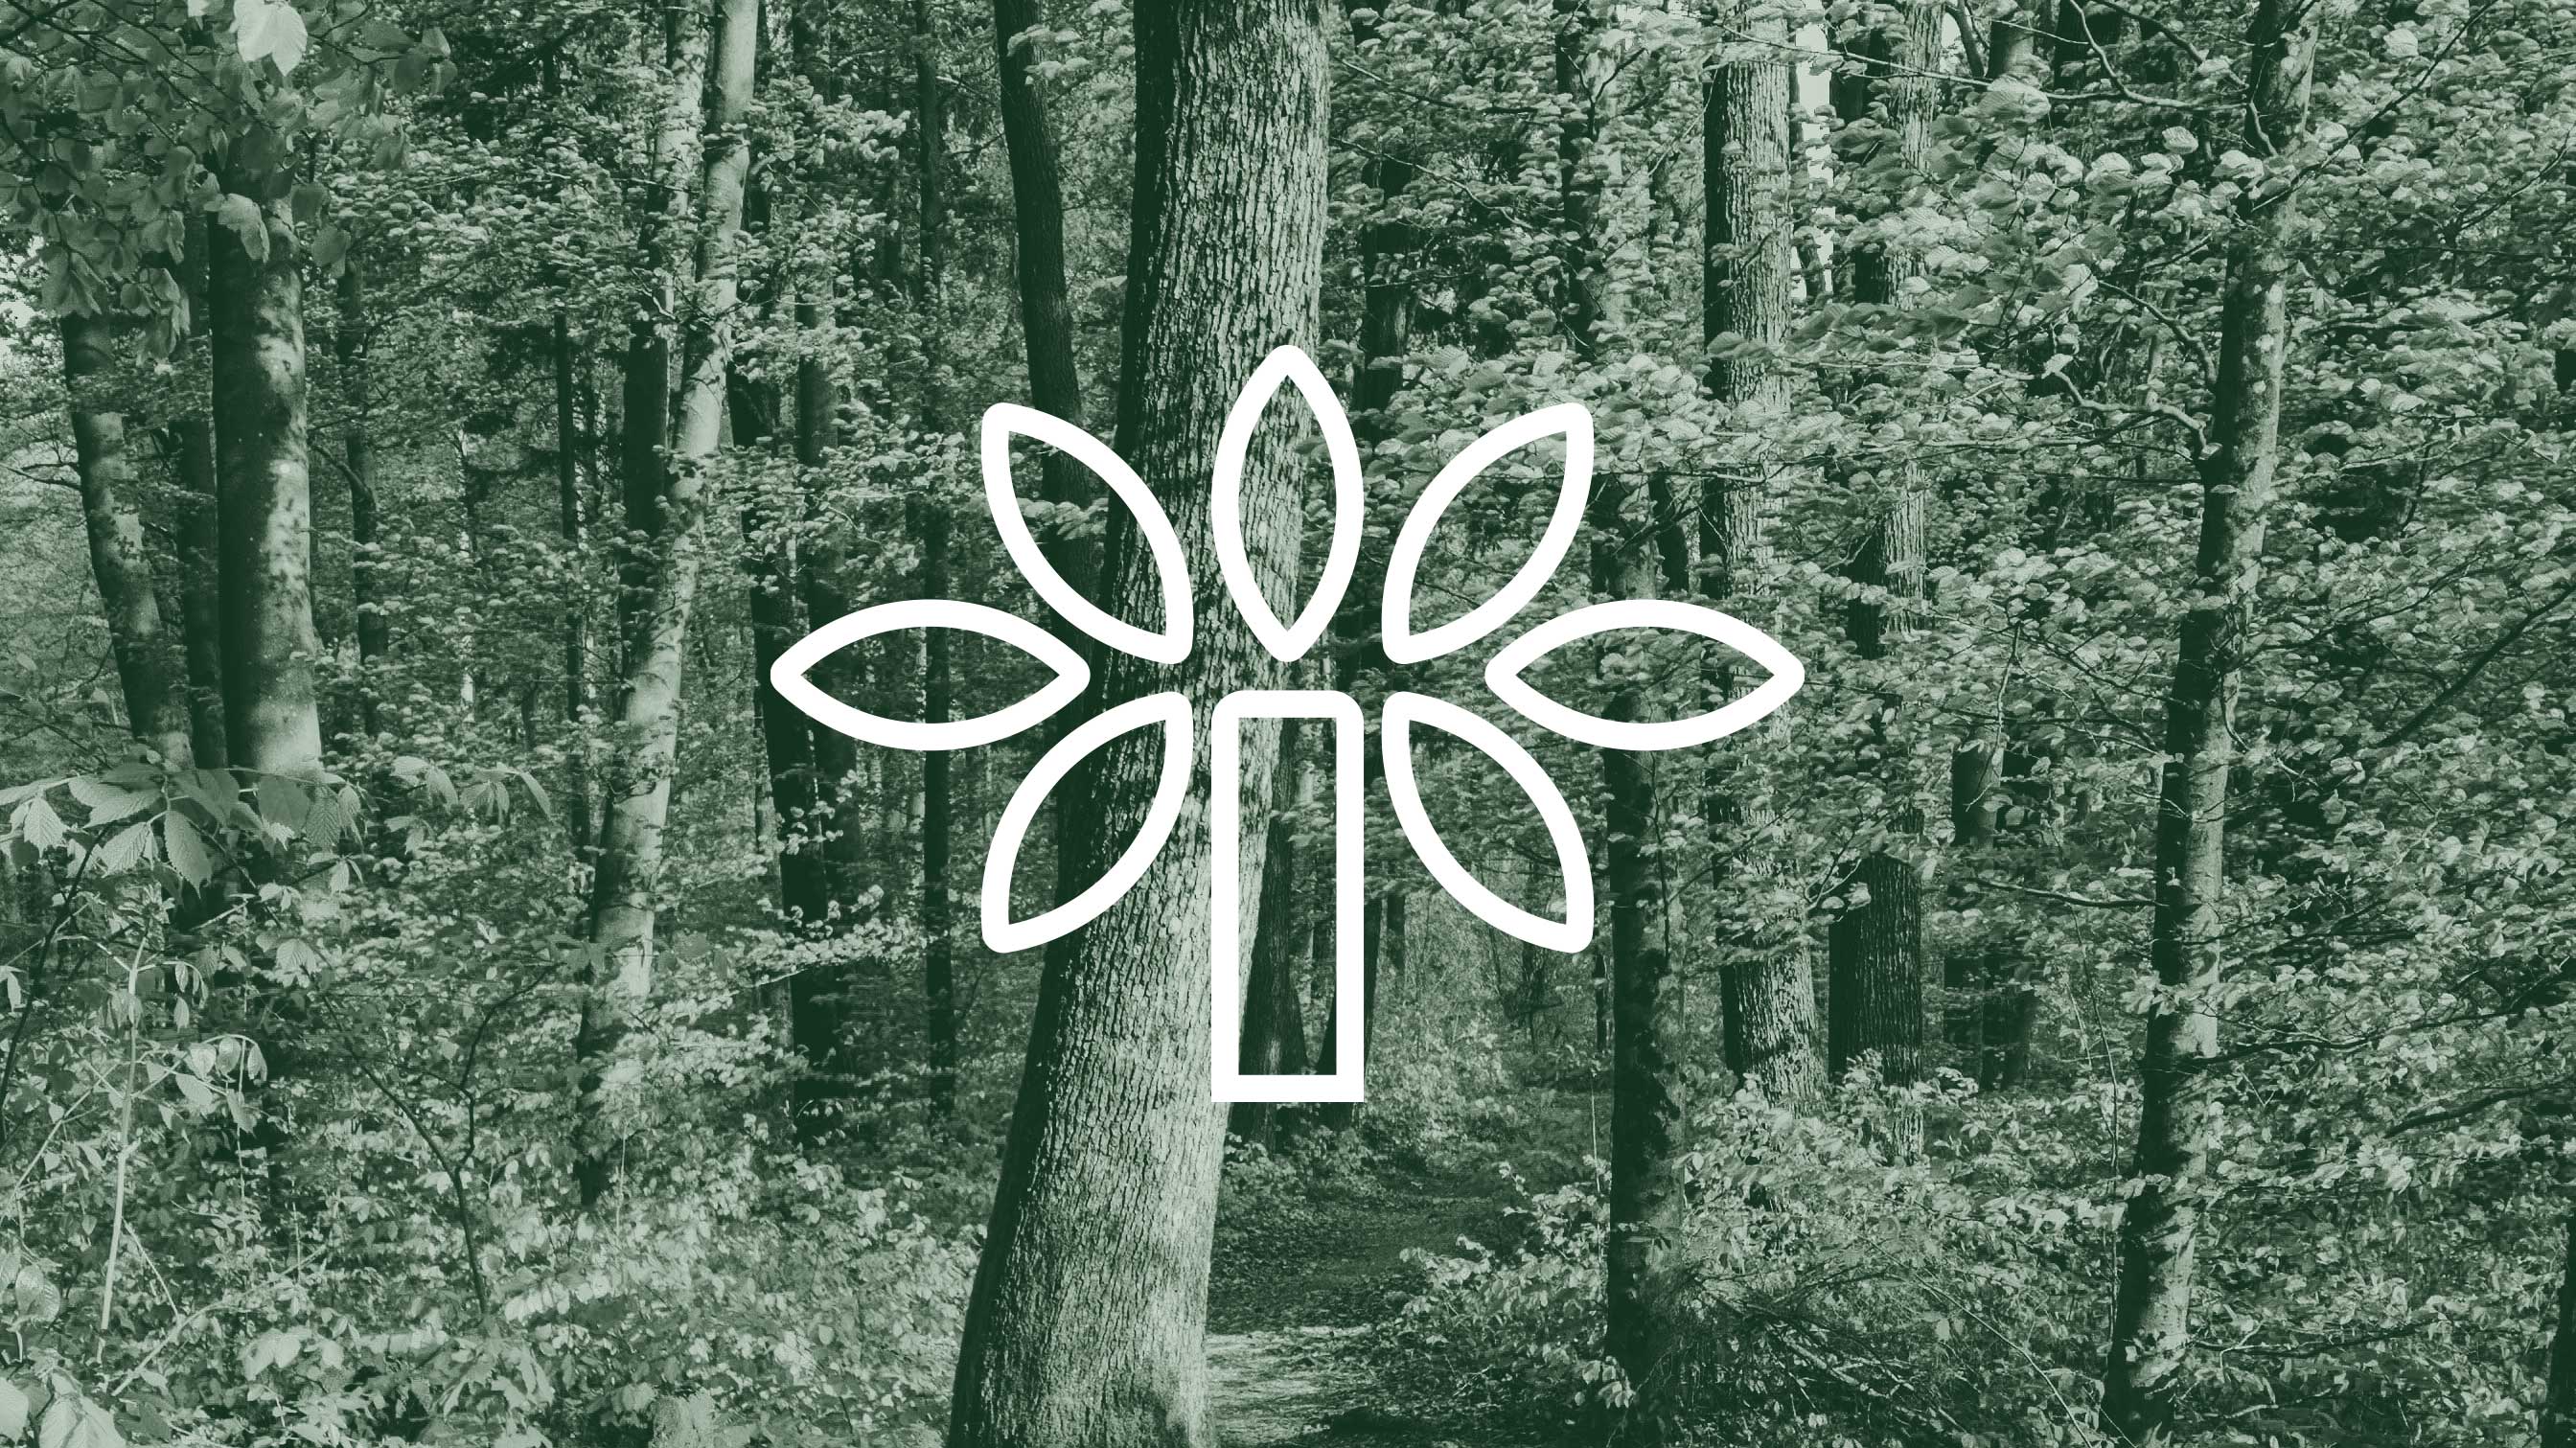 Local Forests Global Logo Symbol Design Superimposed Over a Forest Image